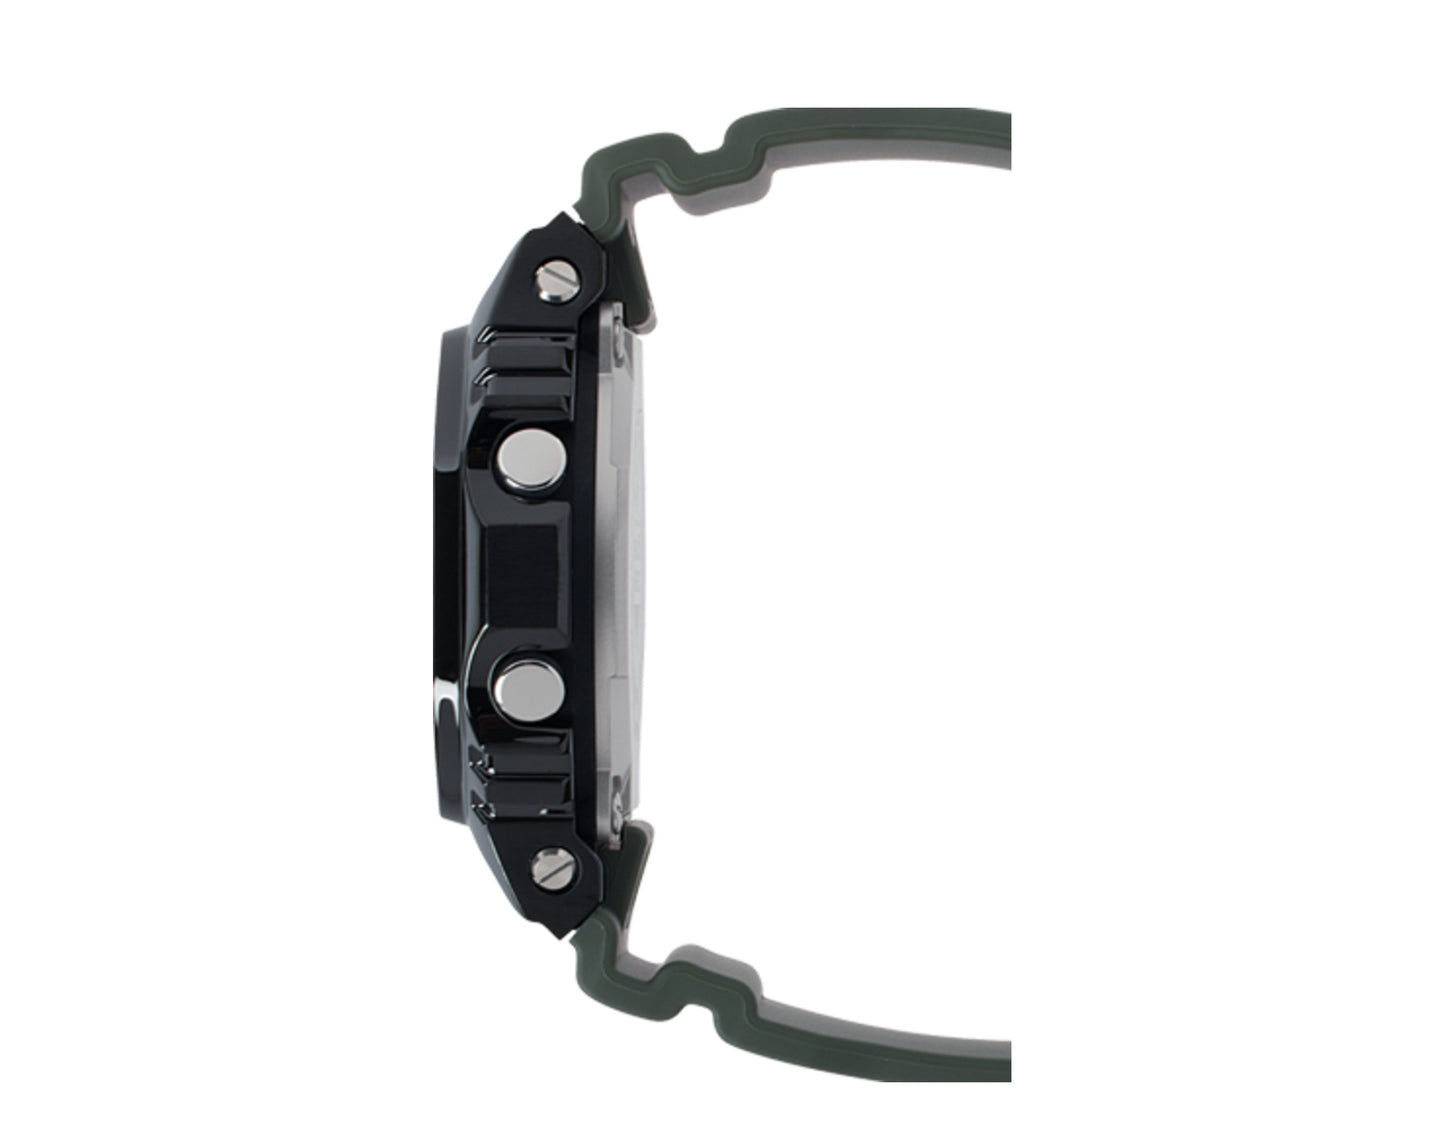 Casio G-Shock Digital Metal and Resin Olive Green/Black Men's Watch GM5600B-3